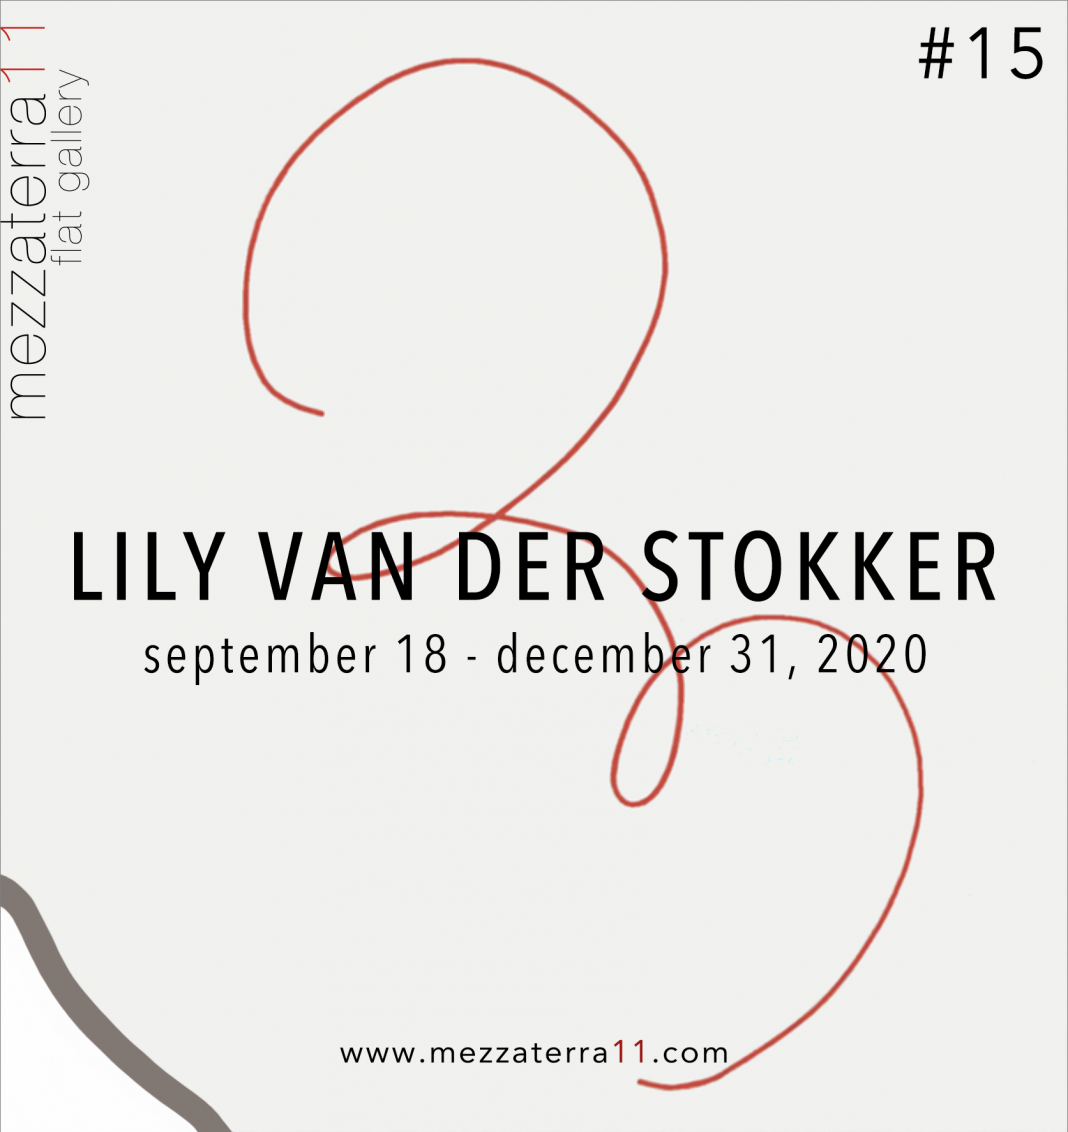 Lily van der Stokkerhttps://www.exibart.com/repository/media/formidable/11/mezzaterra11-flat-gallery-15-LILY-VAN-DER-STOKKER-_e-flyer-1068x1132.png